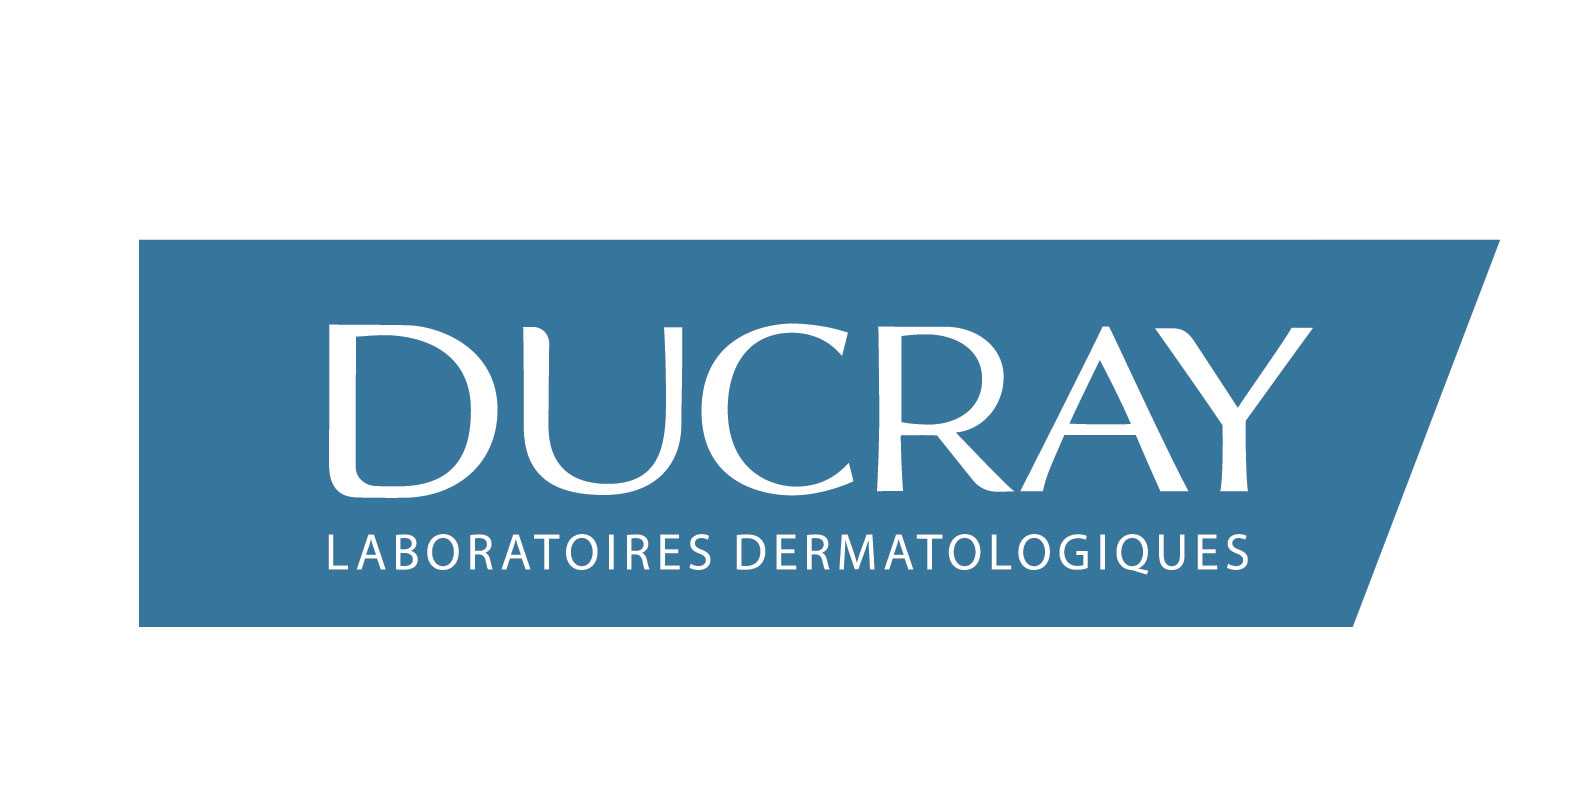 Brand: Ducray